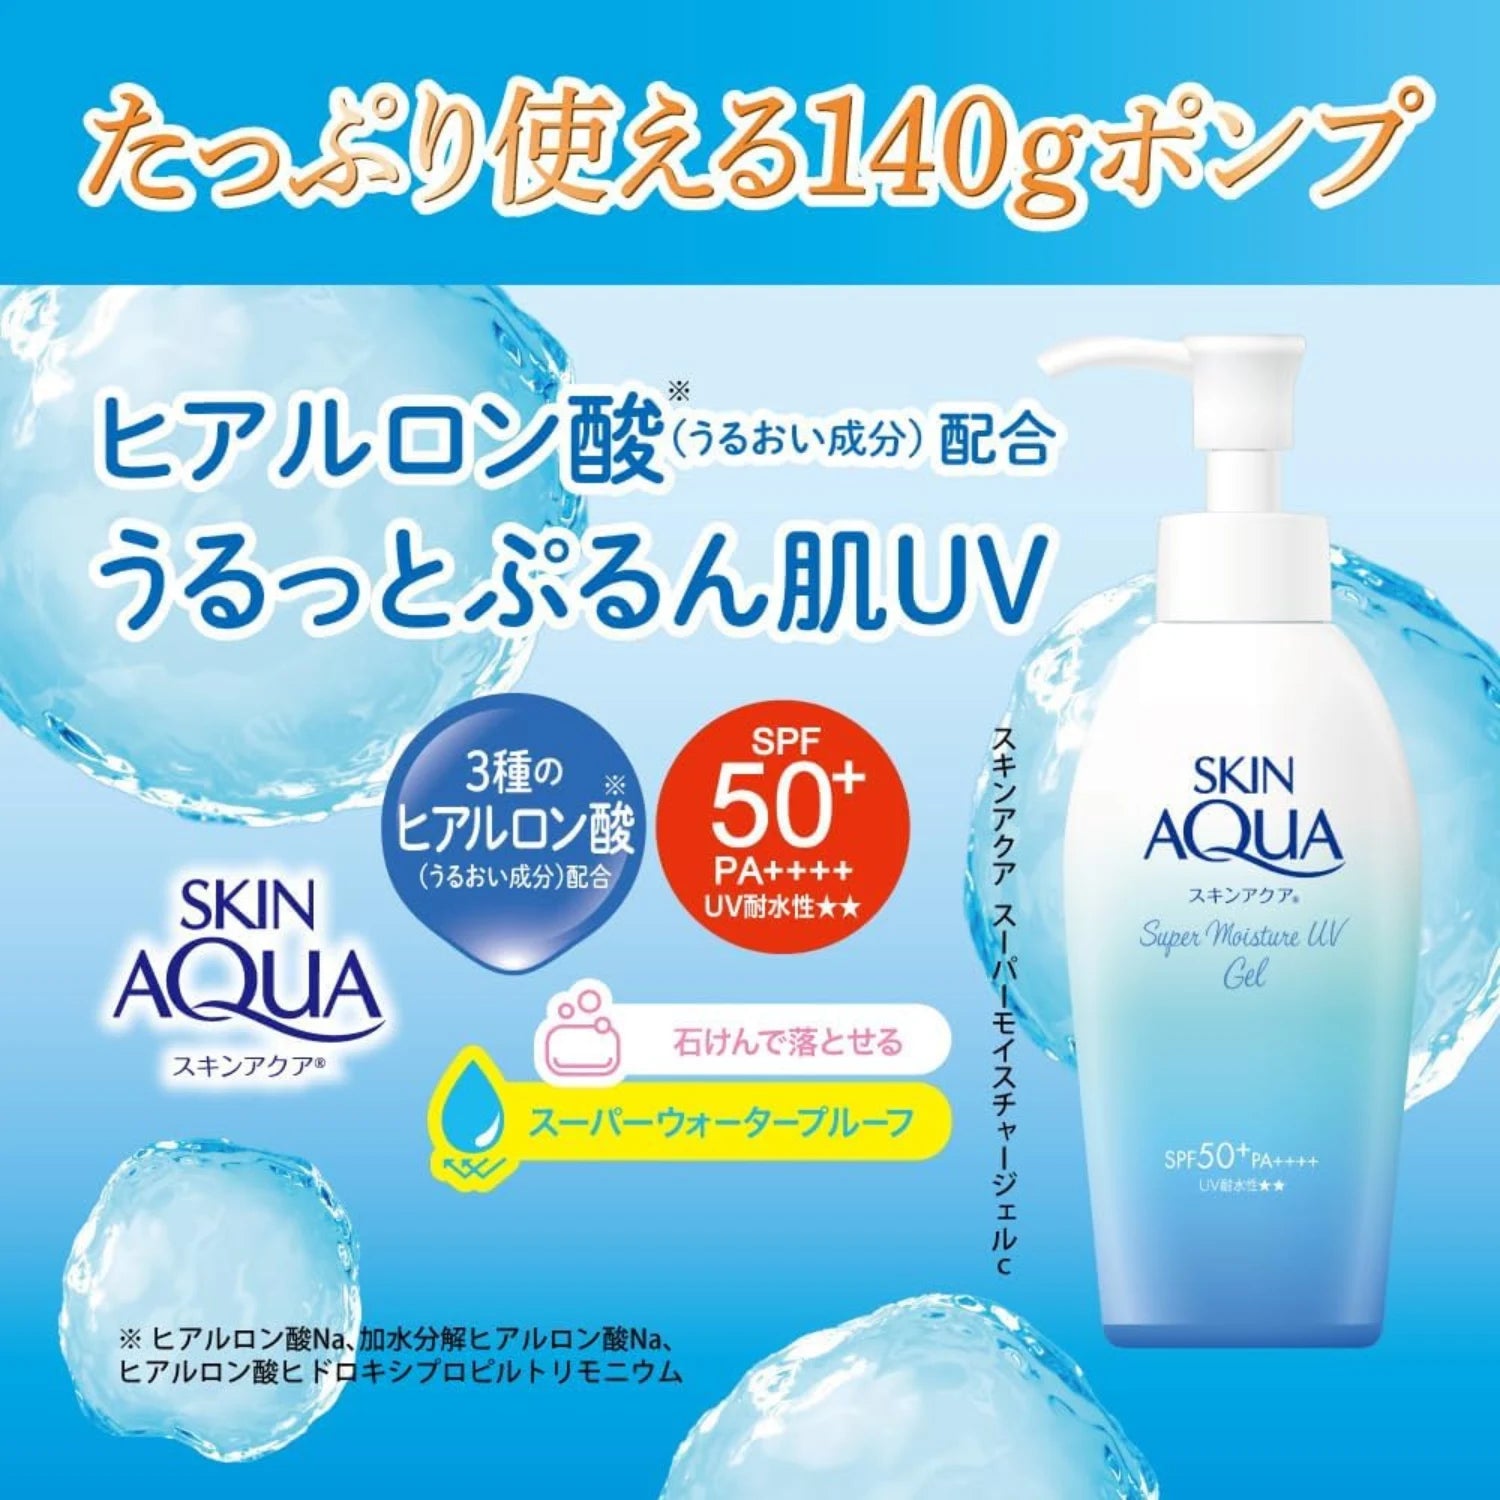 Skin Aqua UV Super Moisture Gel Pump SPF 50+ PA++++ 140g